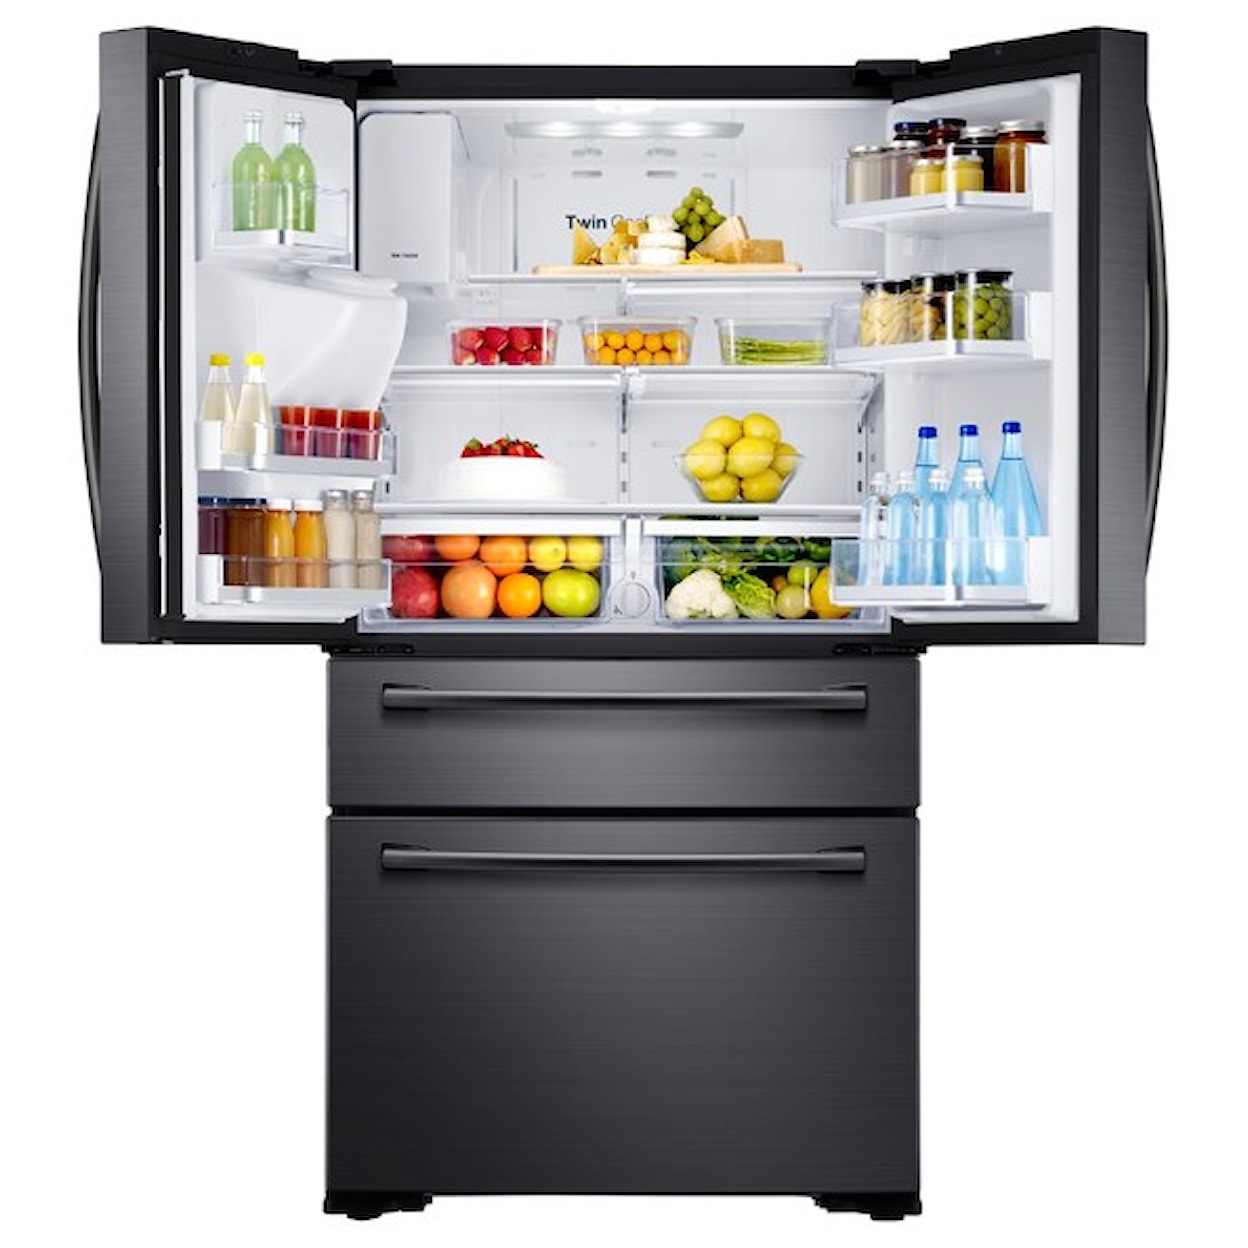 Samsung Appliances French Door Refrigerators 30 cu. ft. 4 Door French Door Refrigerator